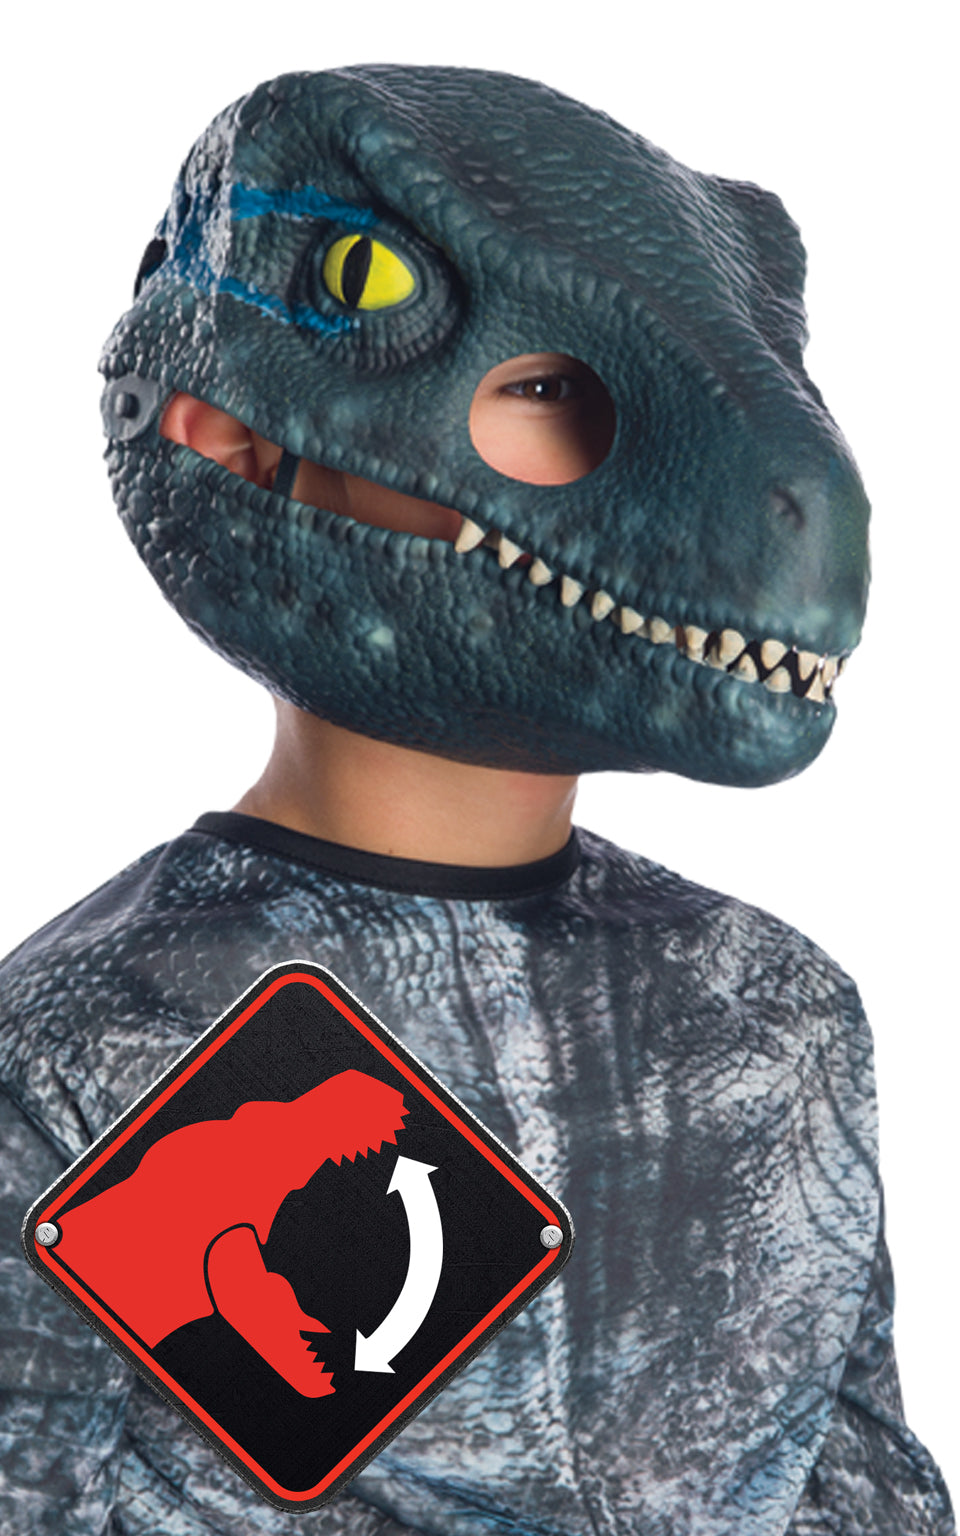 Velociraptor "Blue" Movable Jaw Mask Dinosaur Accessory